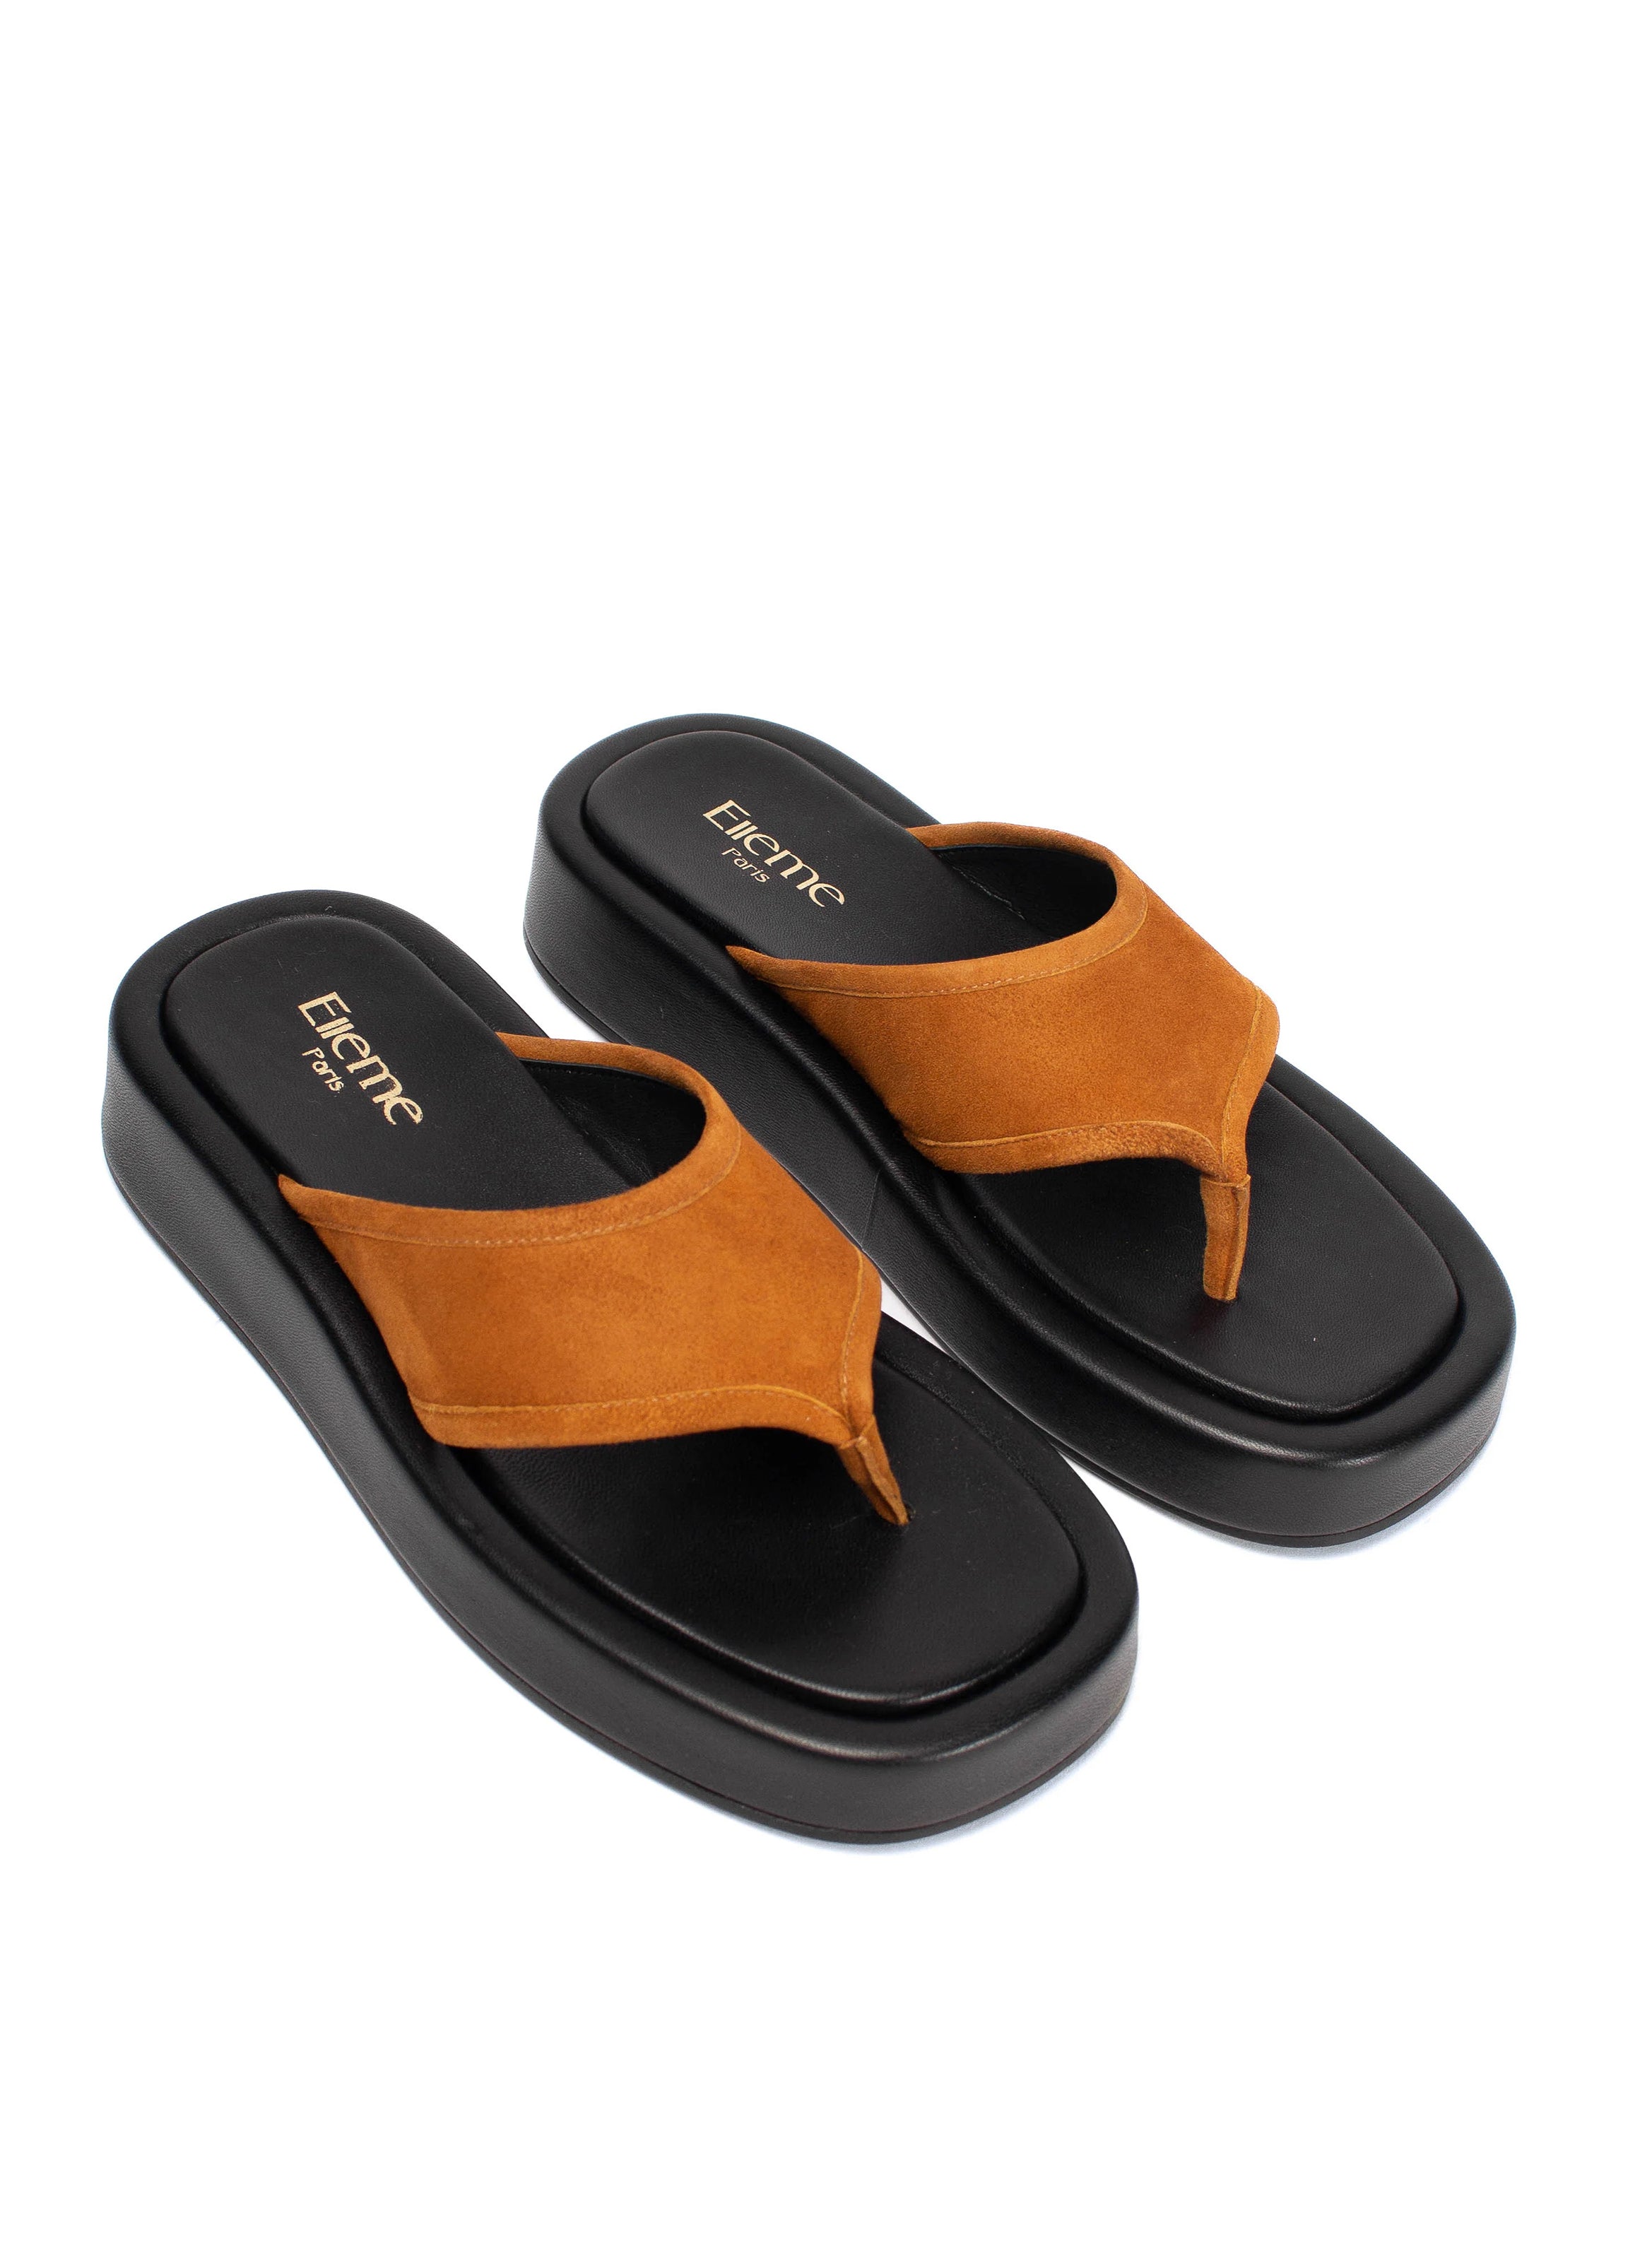 Leather platform thong sandals